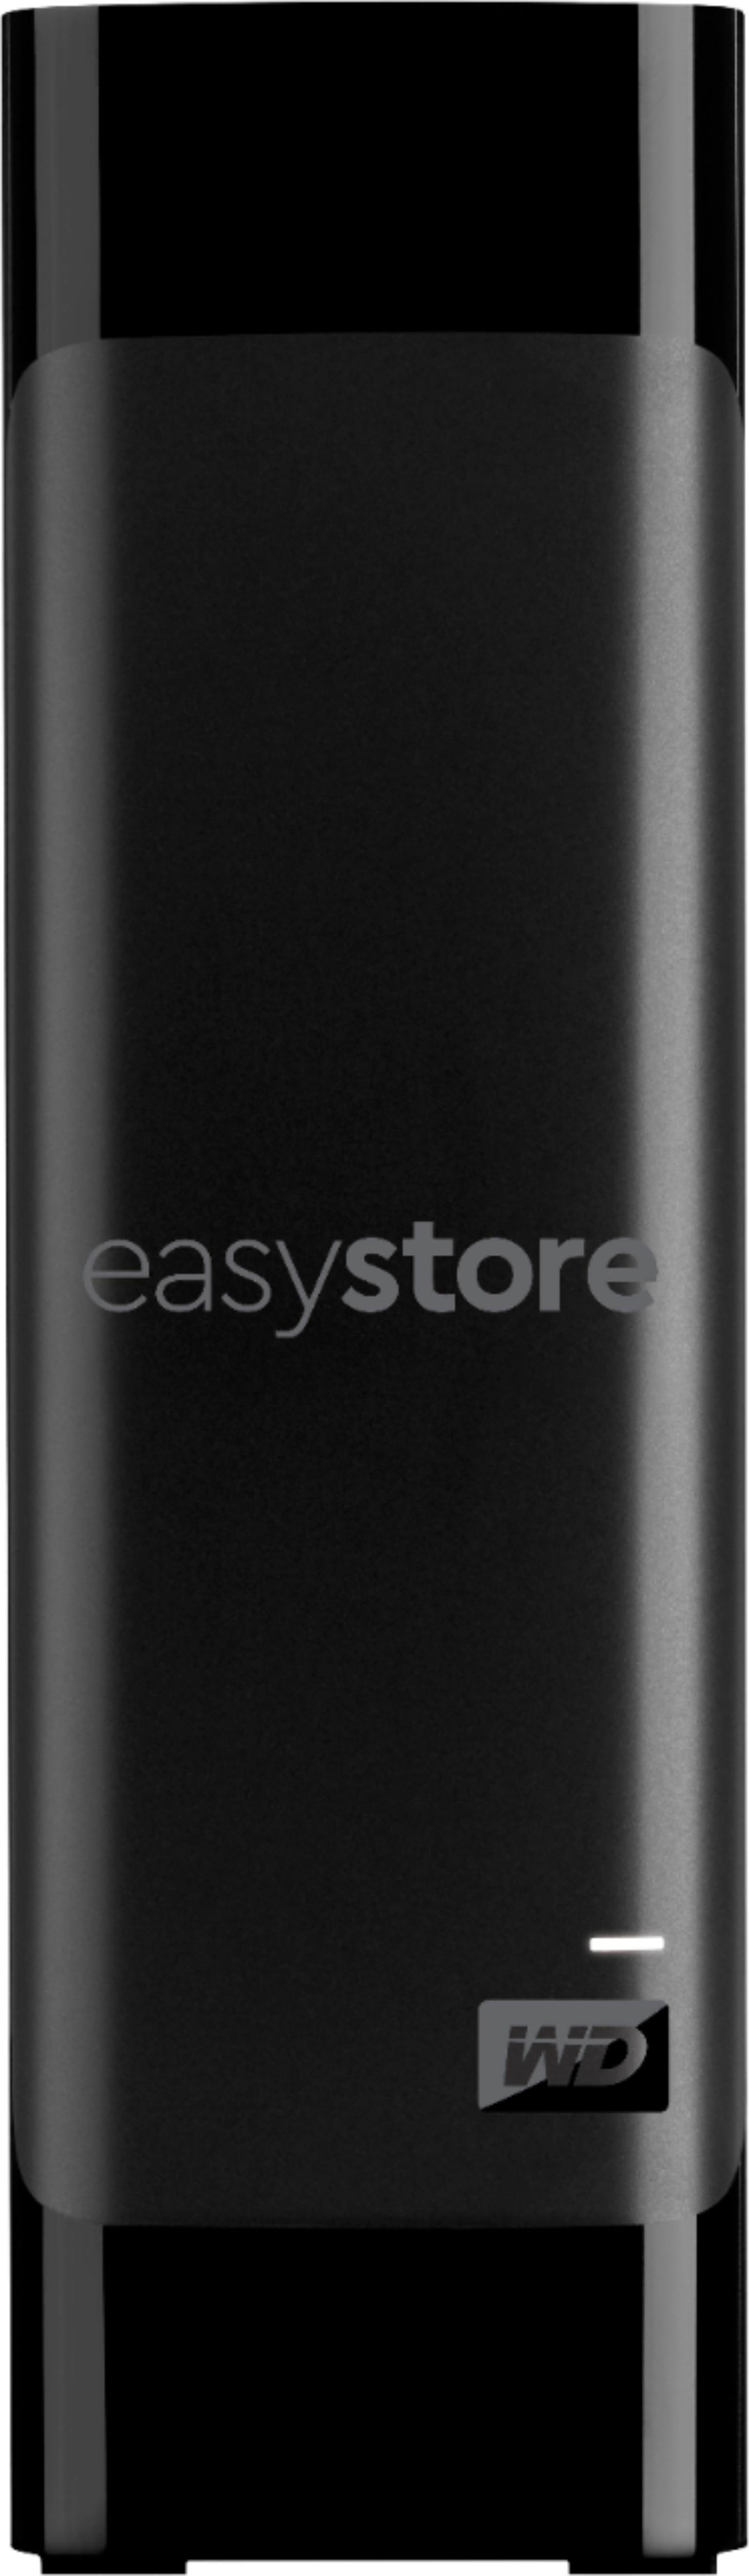 WD - easystore 18TB External USB 3.0 Hard Drive - Black $299.99 FS at bestbuy